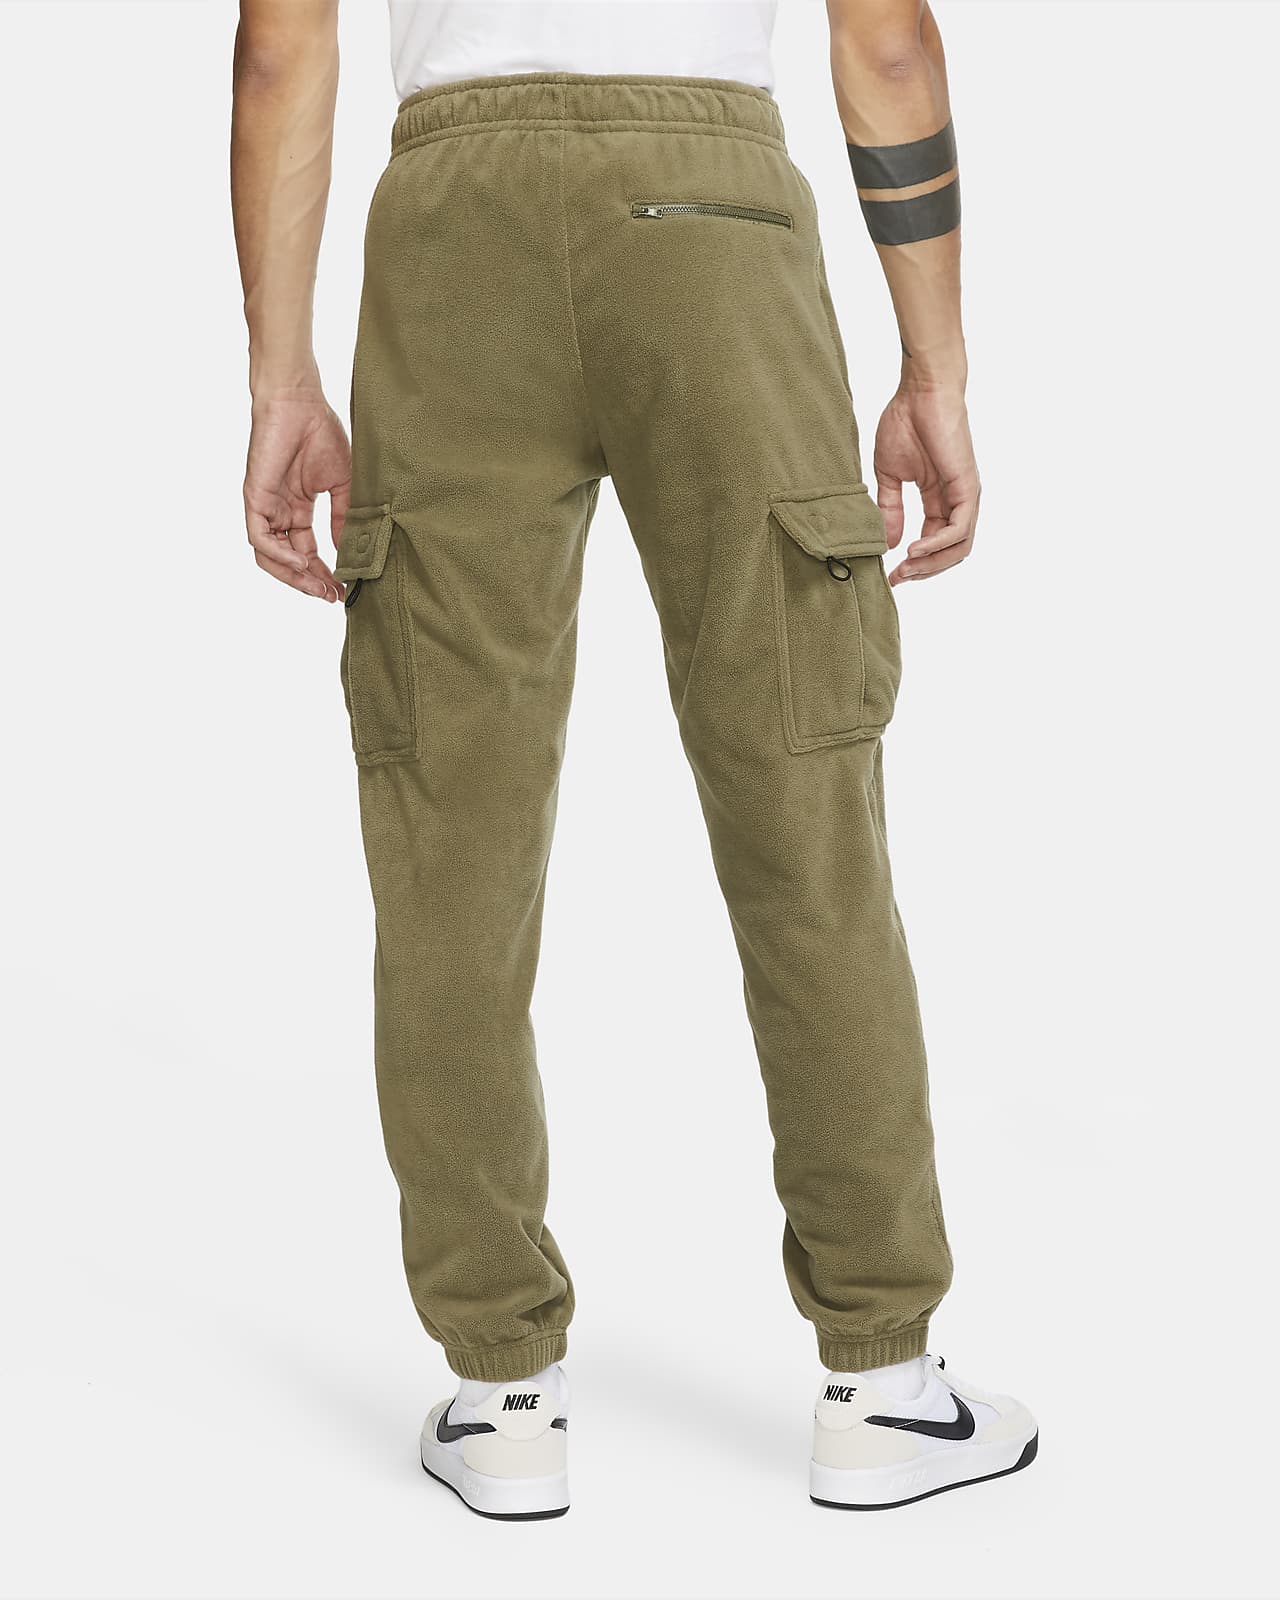 Nike SB Men's Skate Cargo Pants